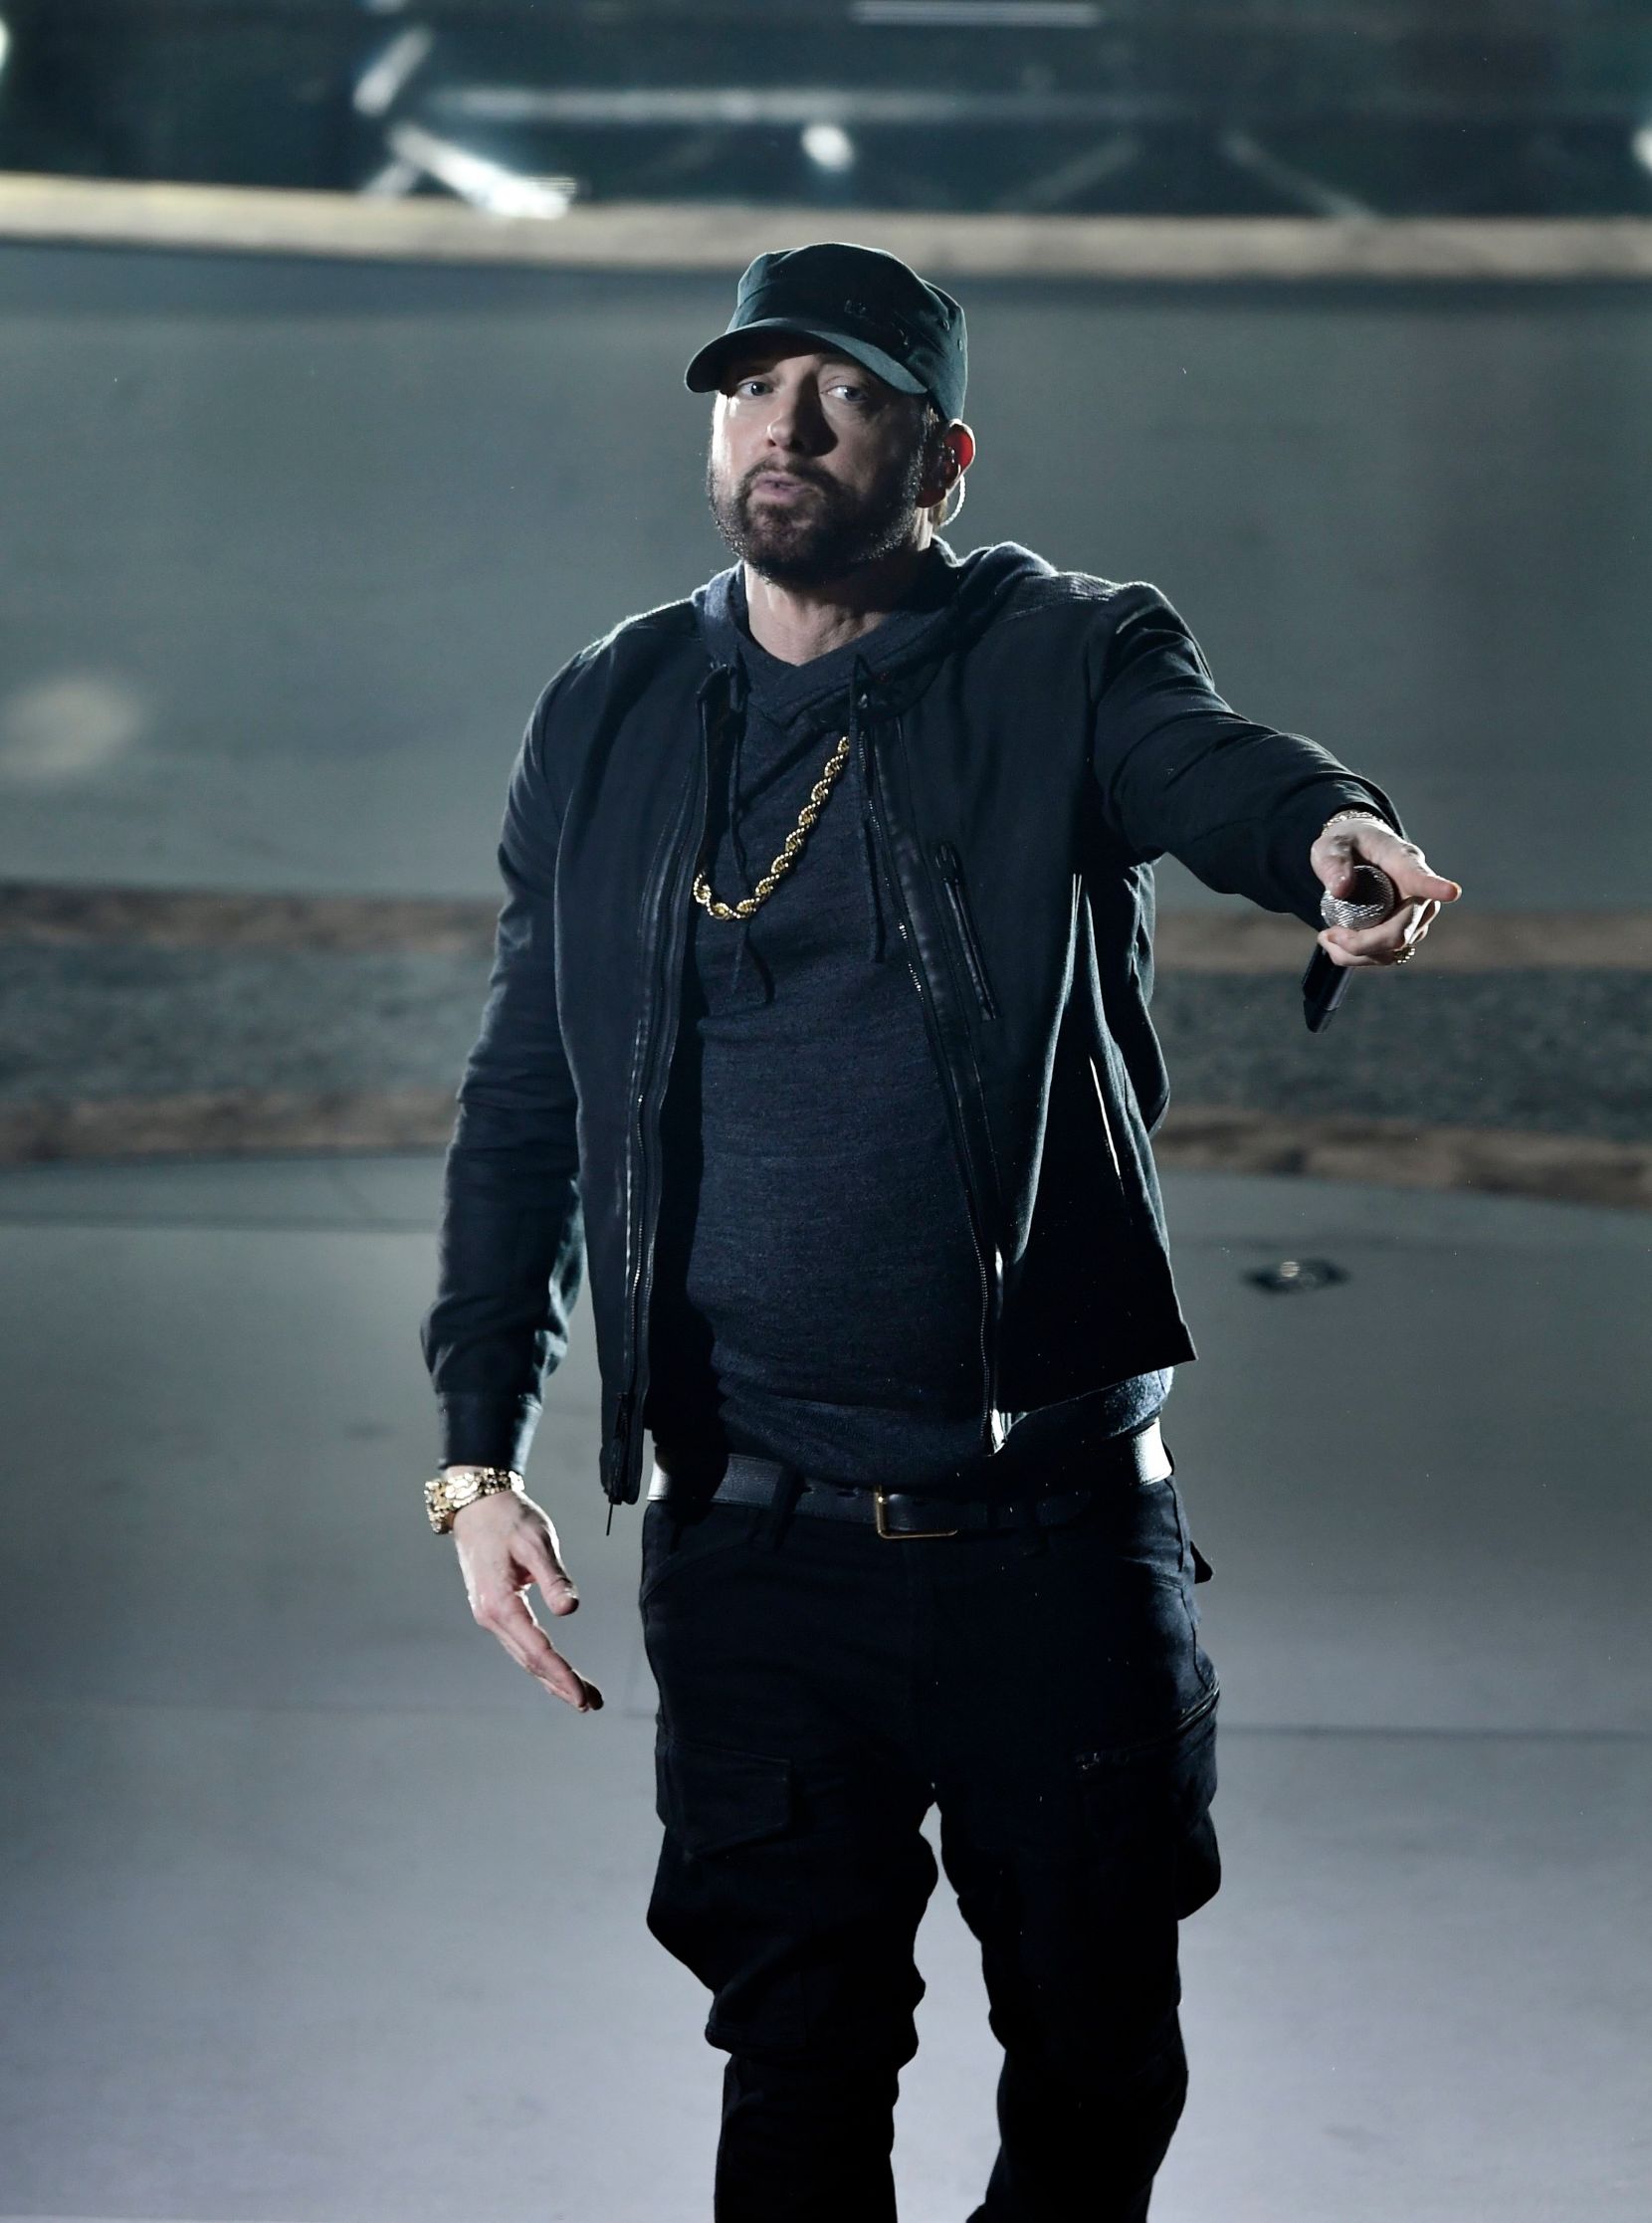 Eminem Oscars 2020: Rapper Does Surprise 'Lose Yourself' Performance